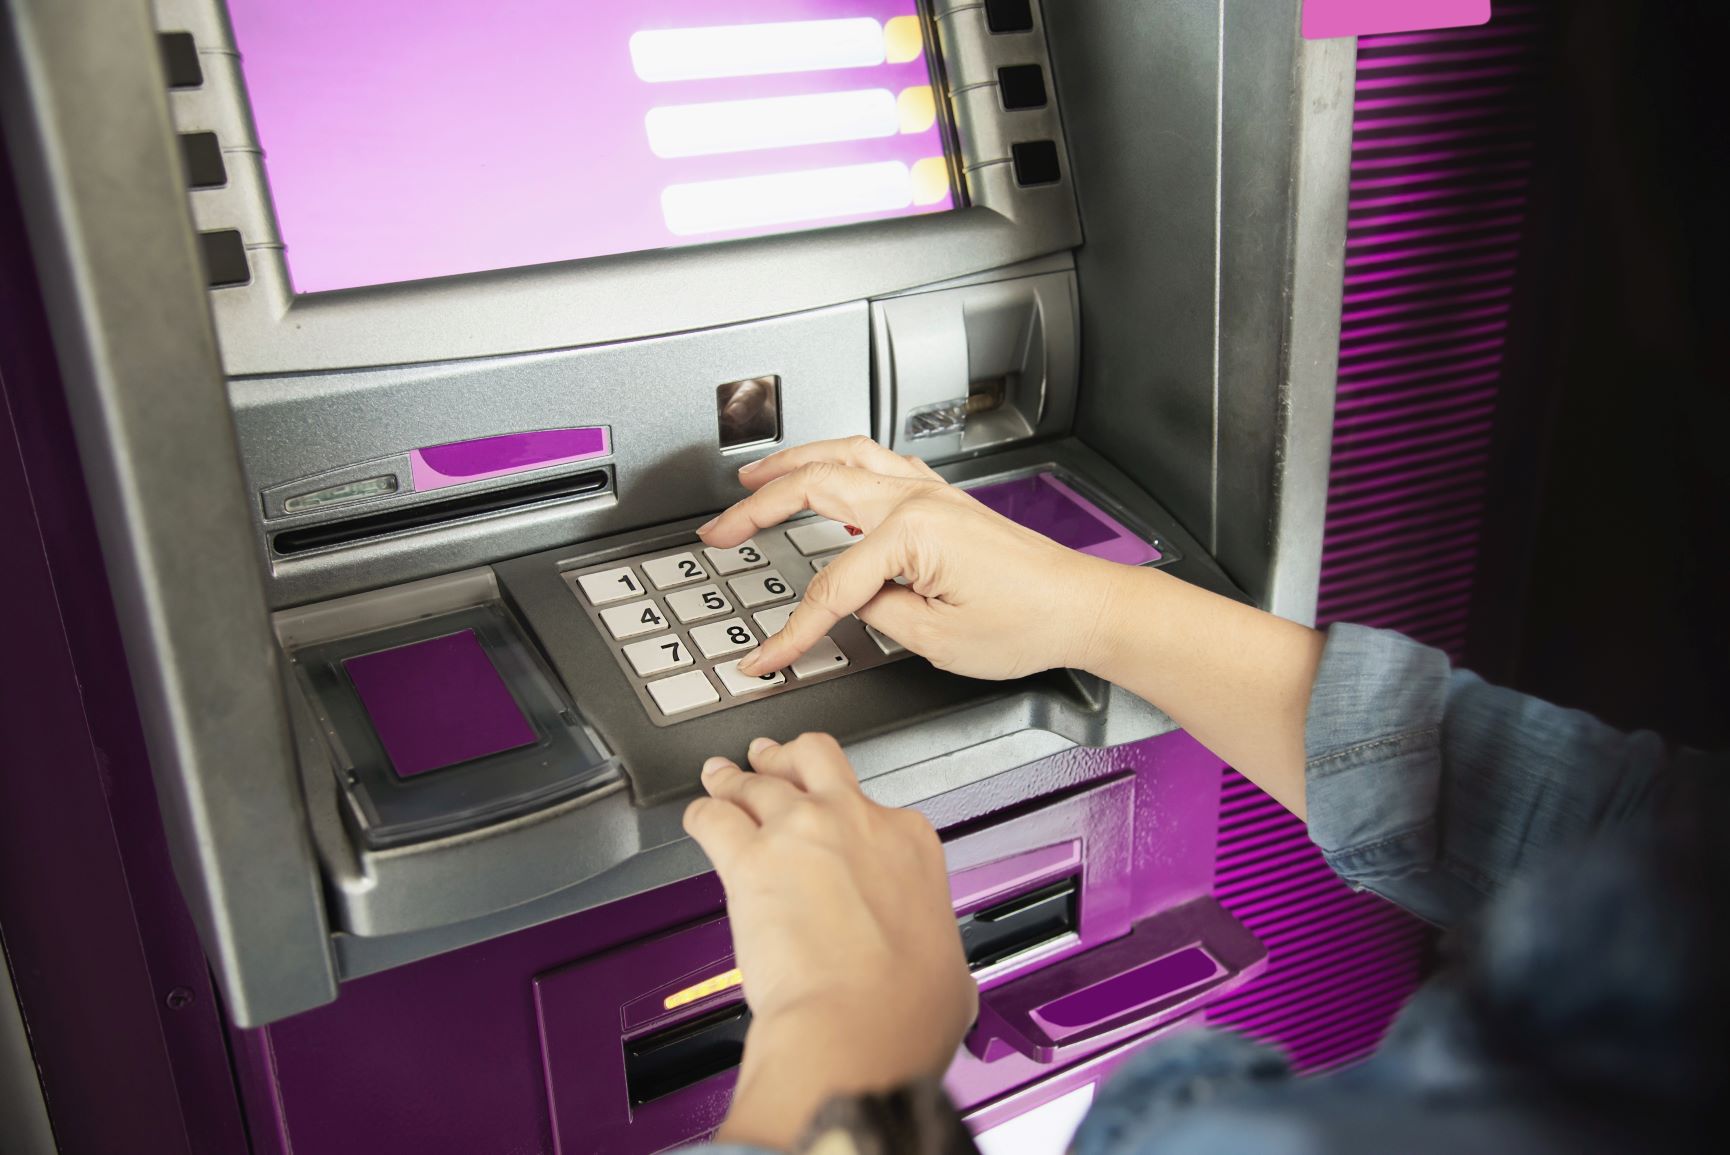 Банкомат деньги сразу. Банкомат. Банкомат (ATM). Деньги в банкомате. Фотография банкомата.